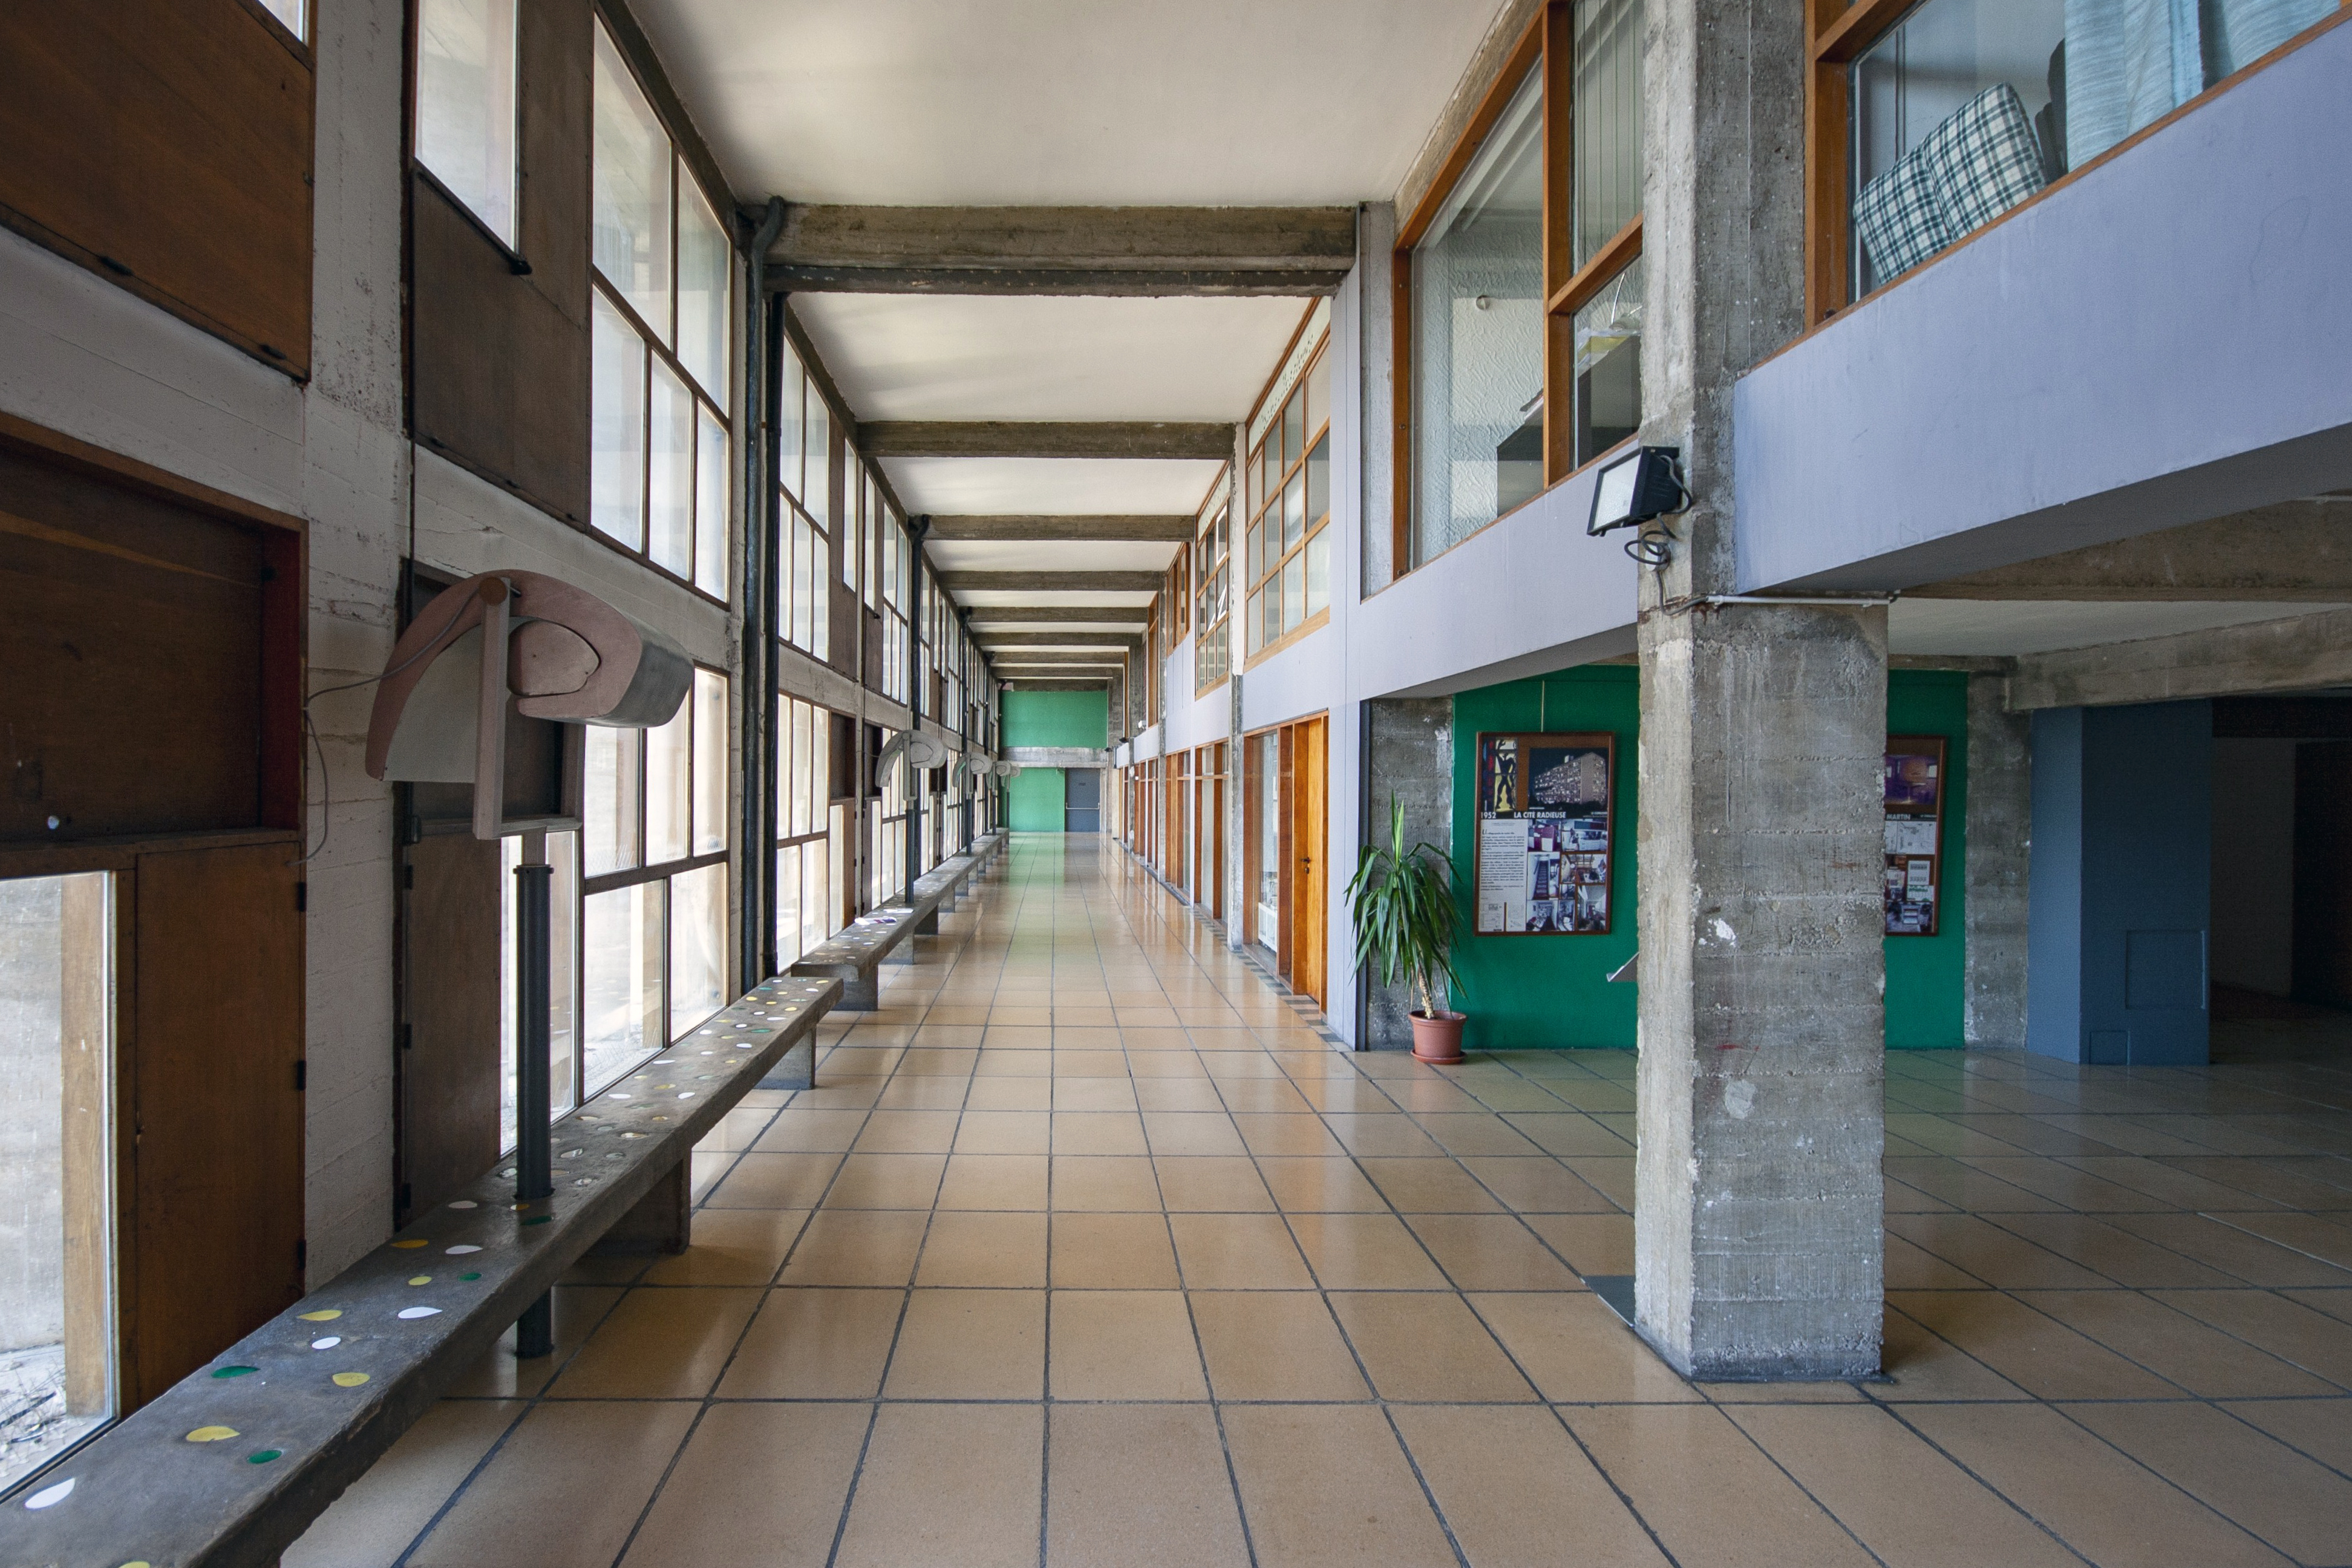 Interior hallway of Unite d'habitation